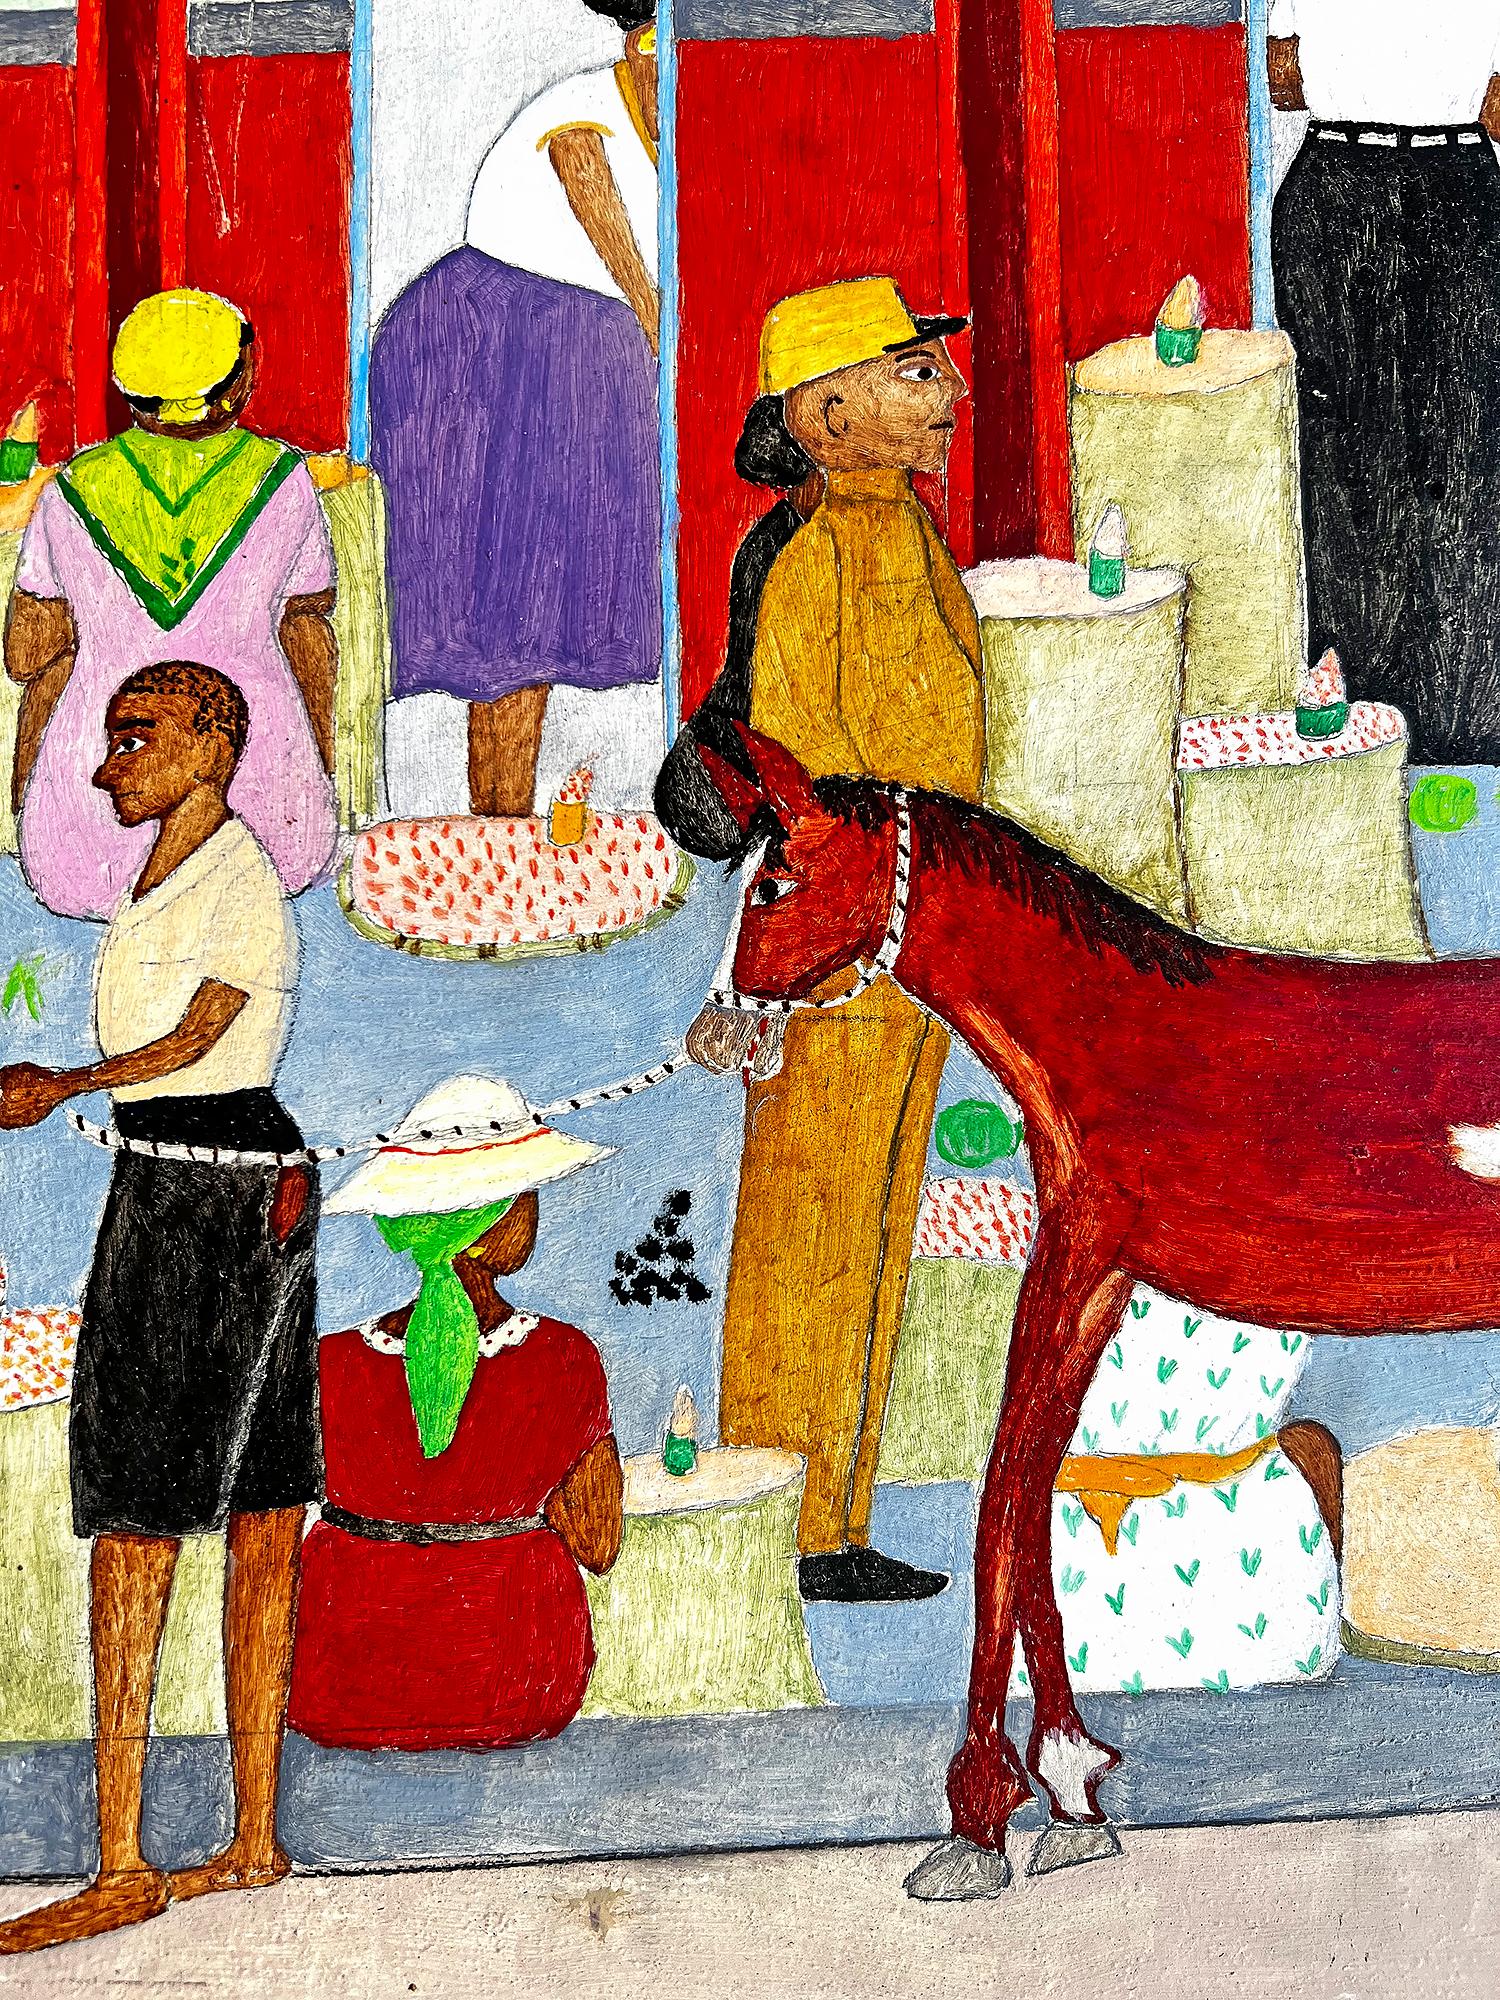 Marché Cluny  - Market at Cap-Haitien  - Haitian Street Art  - Outsider Art Painting by Sénèque Obin